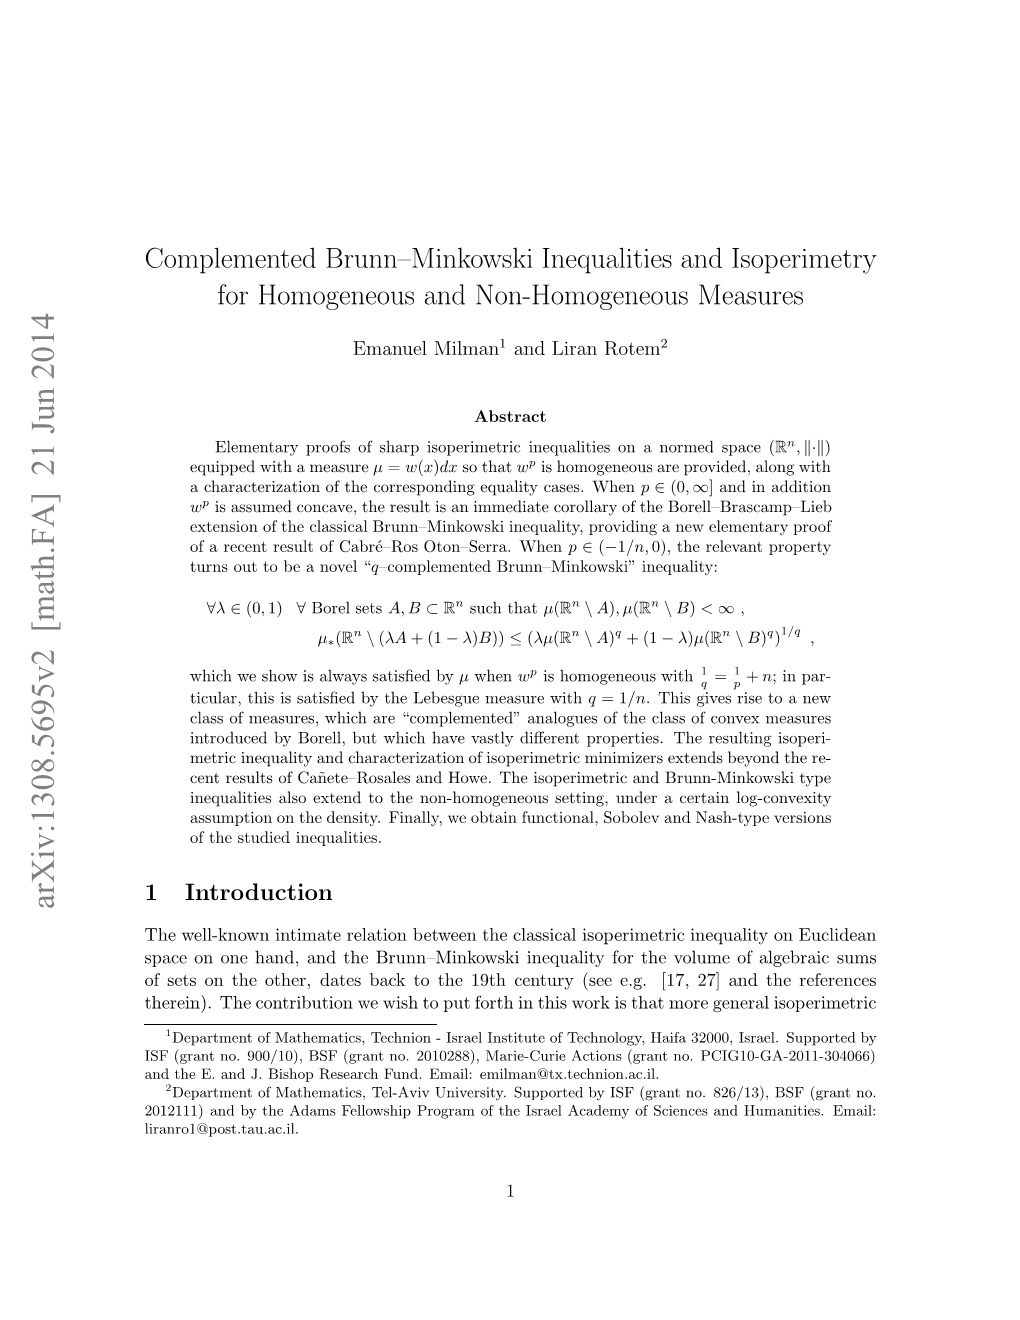 Complemented Brunn-Minkowski Inequalities and Isoperimetry For